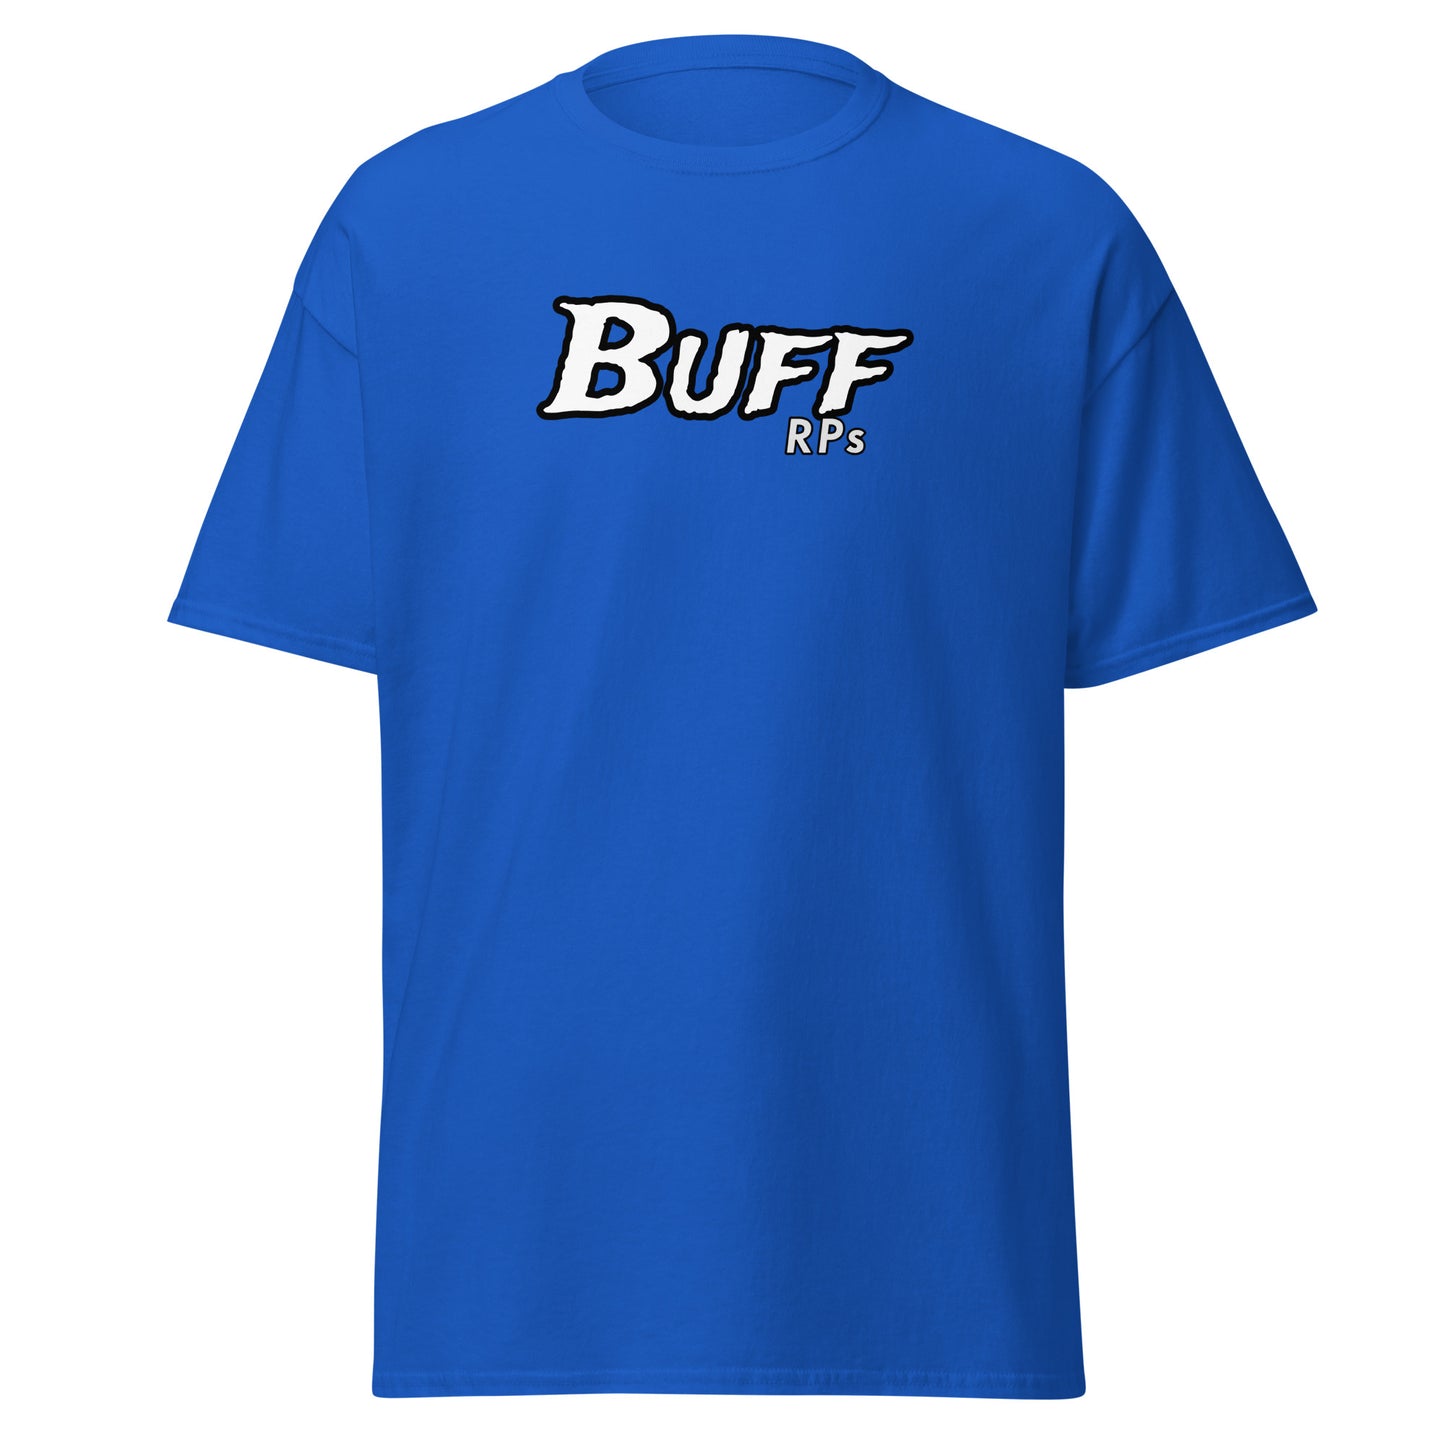 Buff RPs Men's Classic T-Shirt